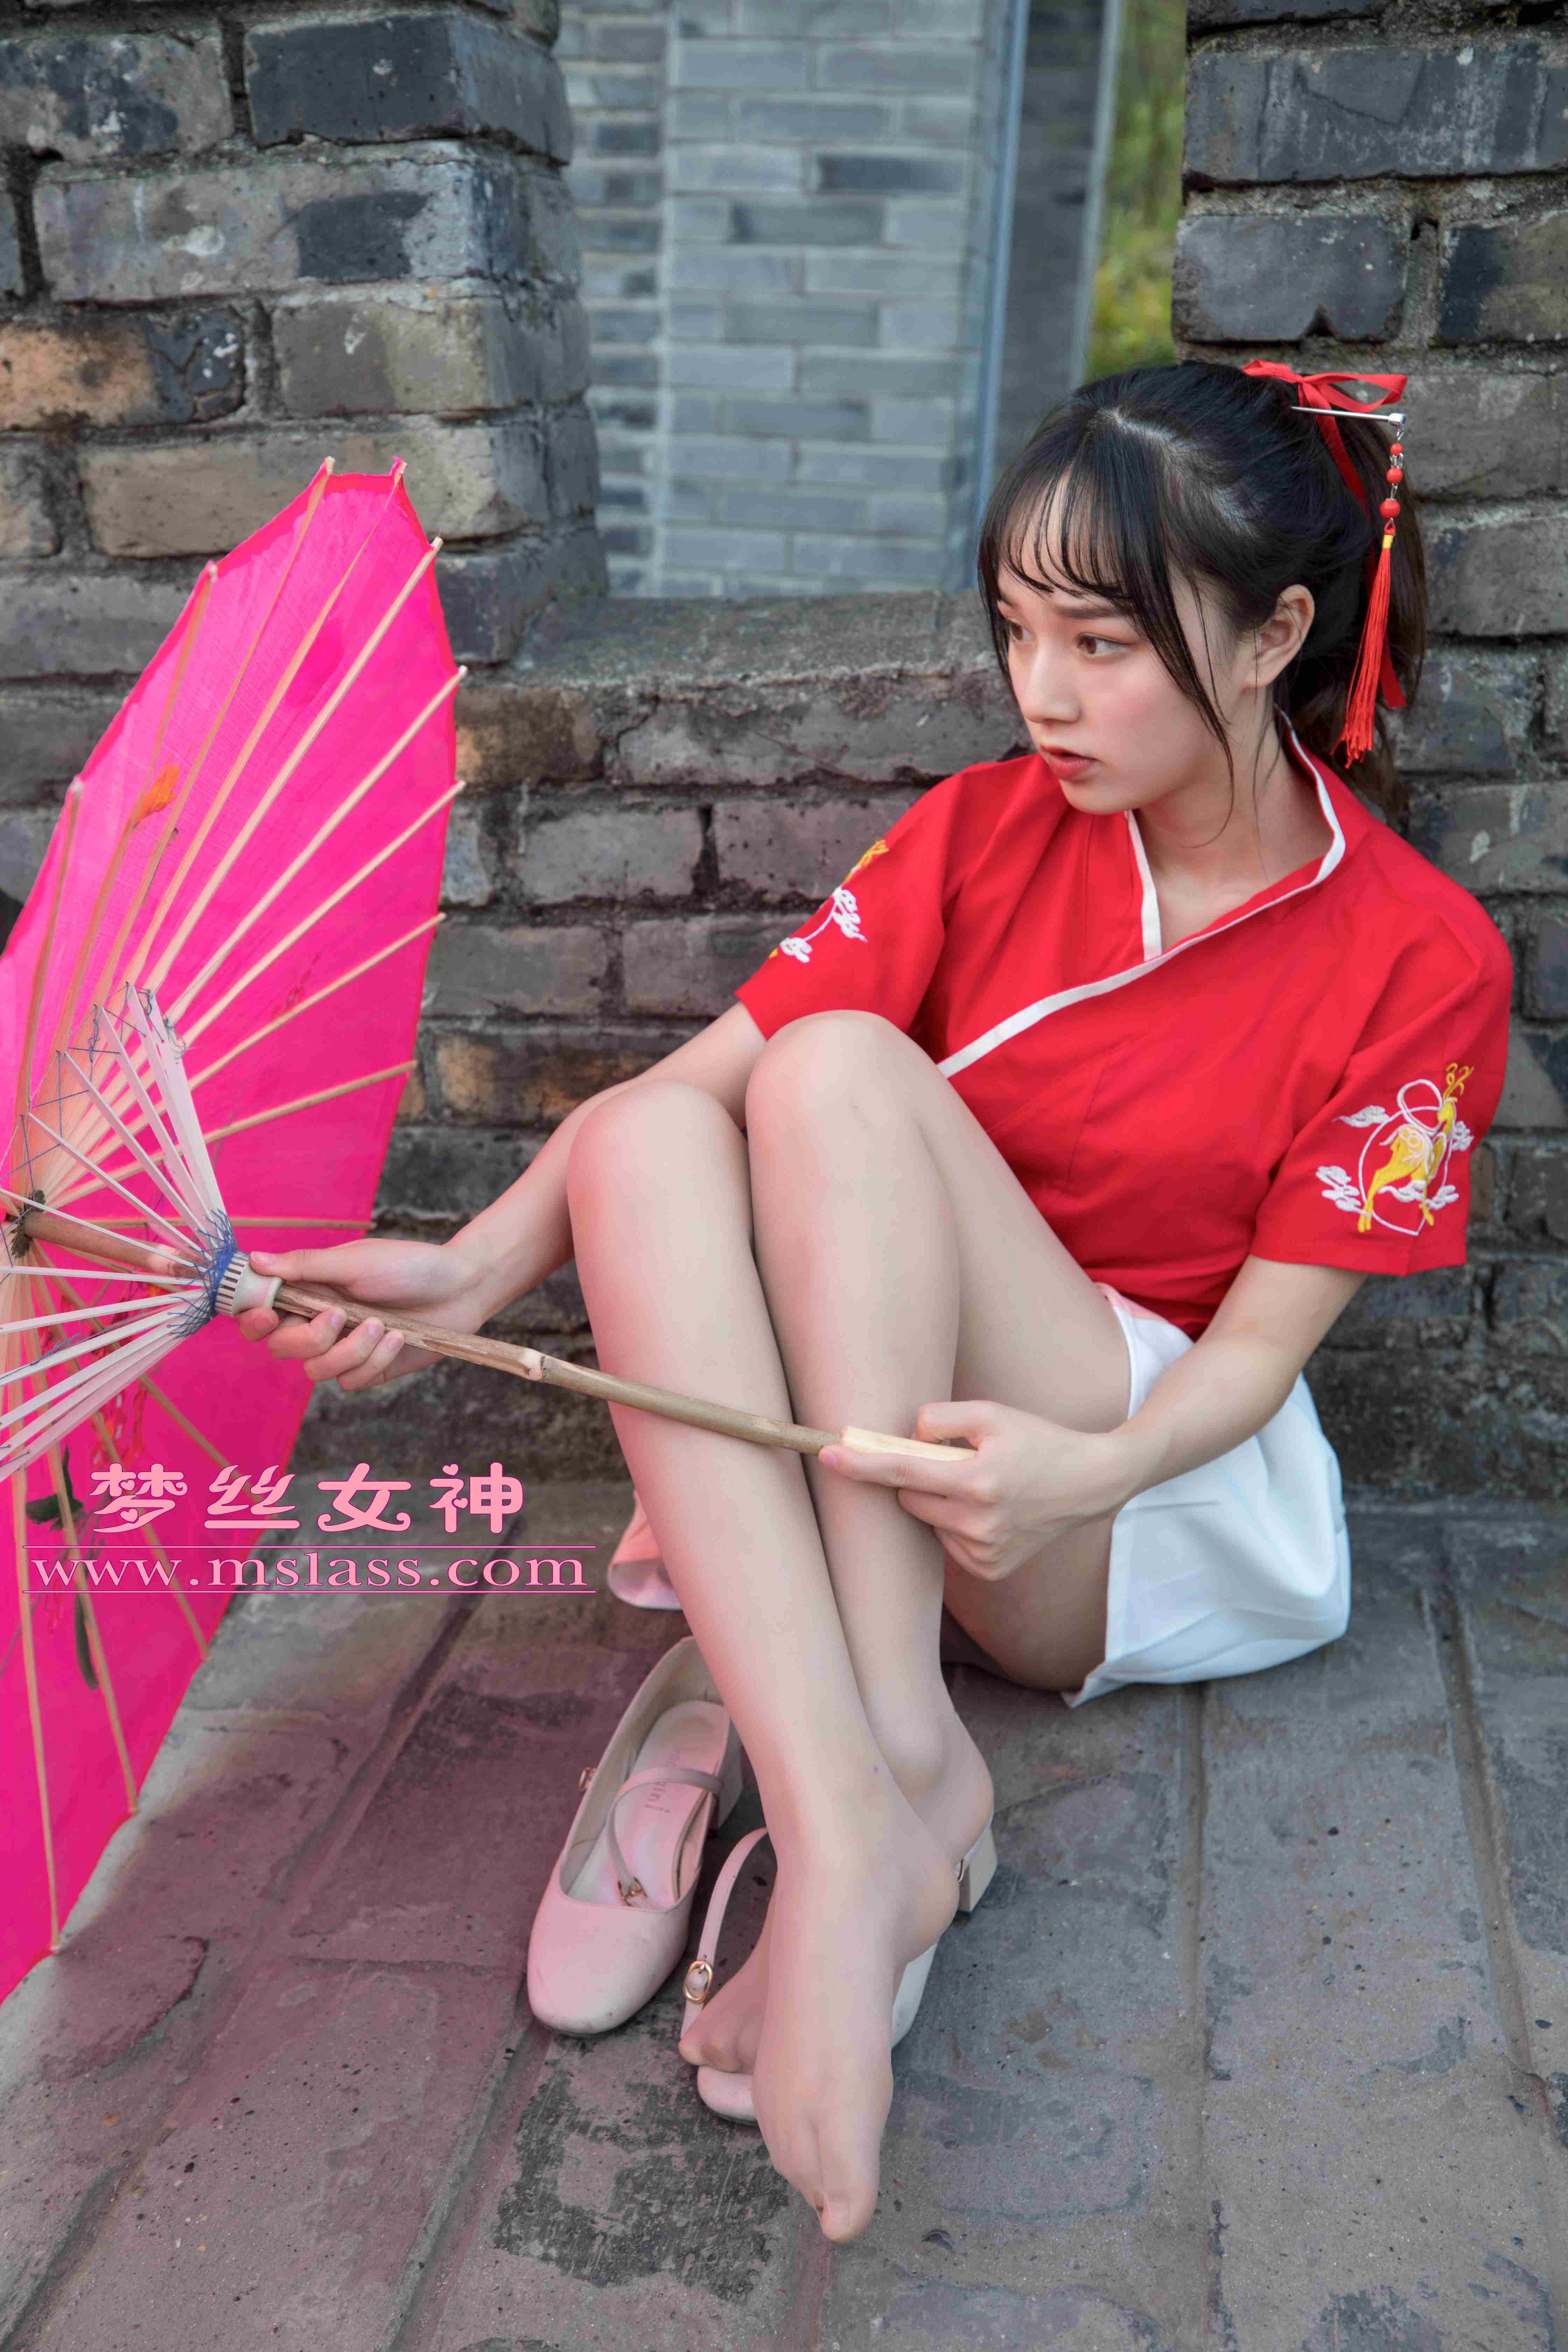 China Beauty Legs and feet 98